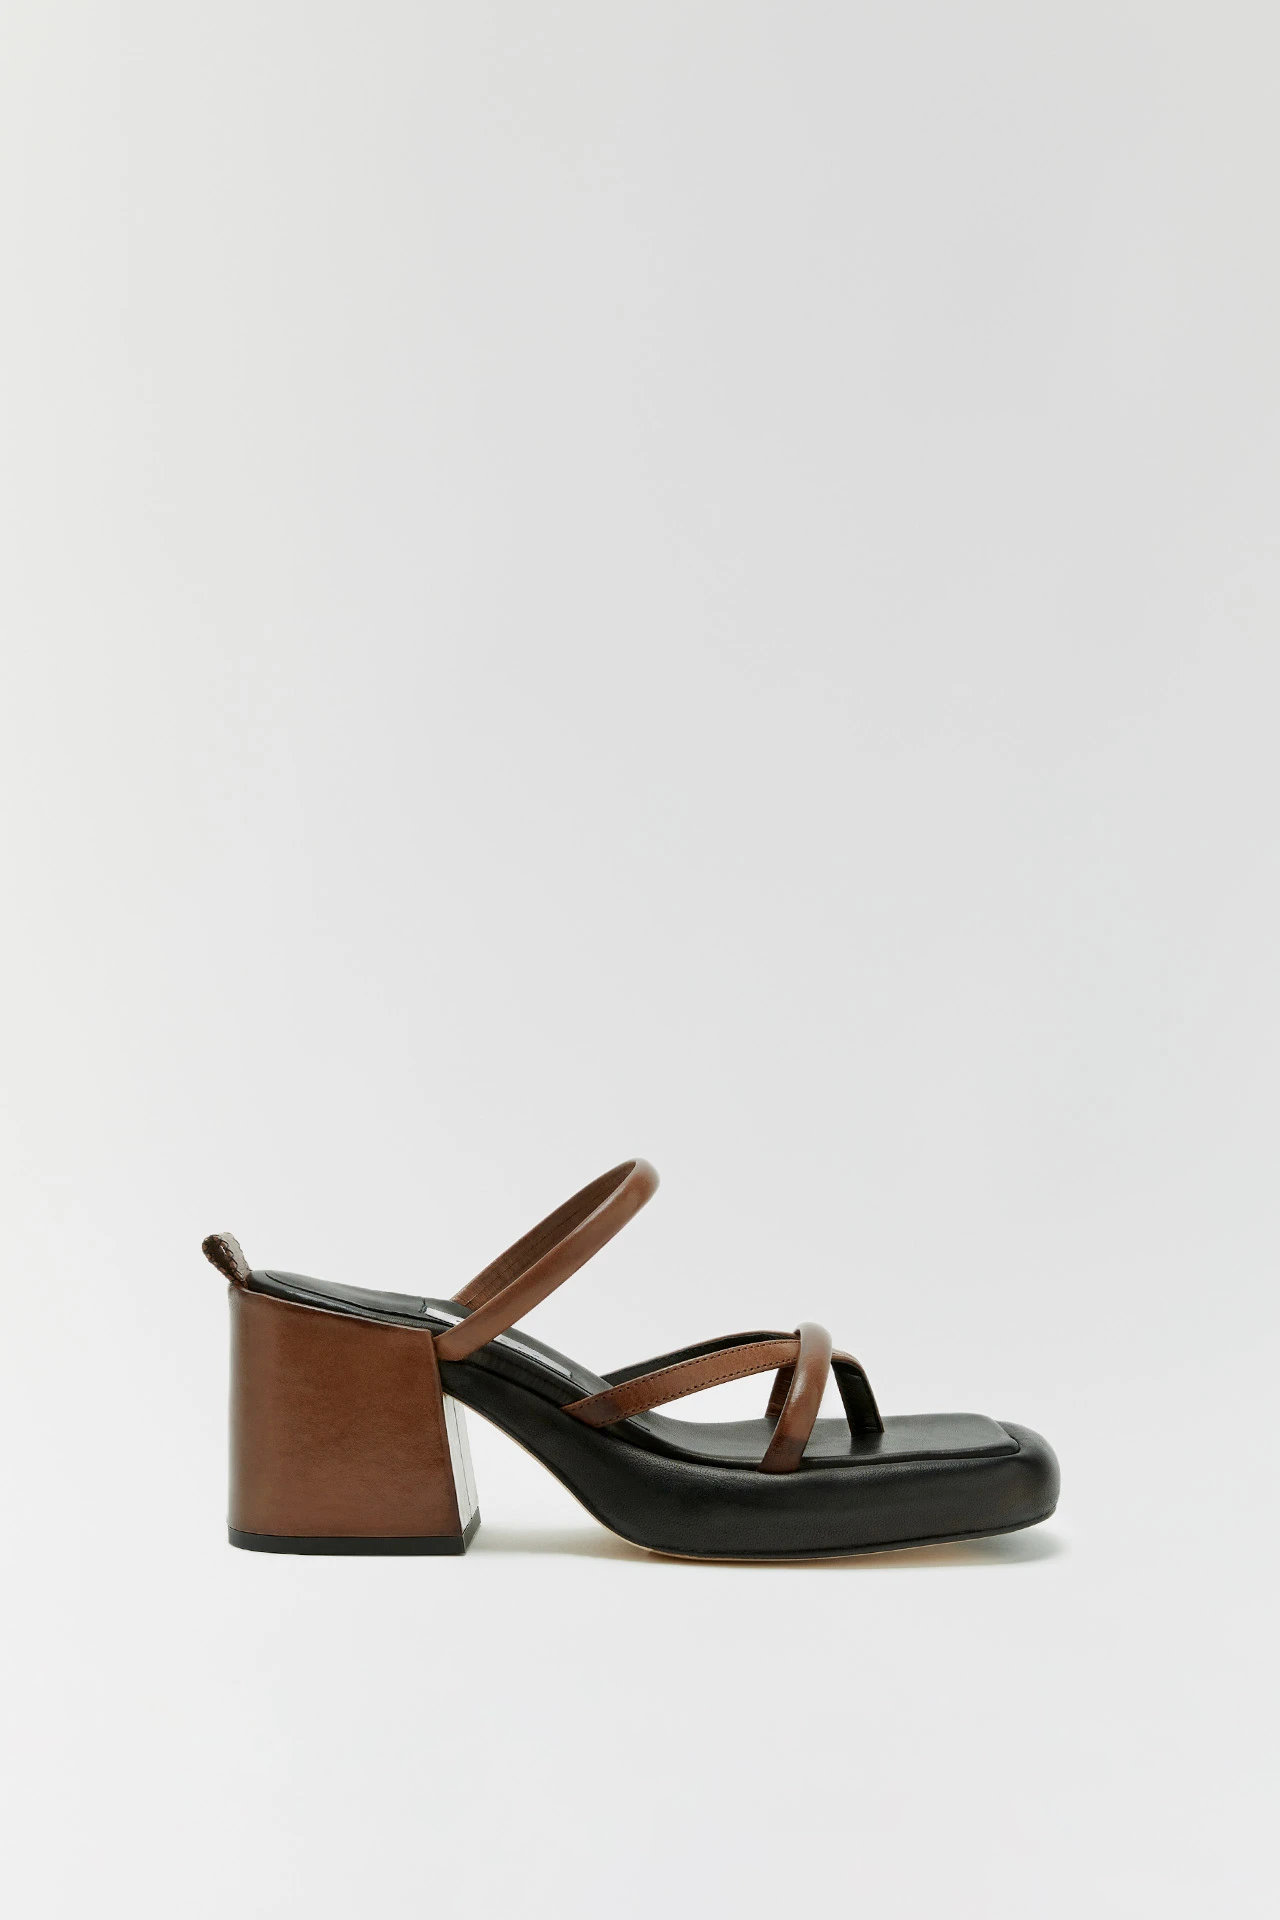 miista-delphine-brown-sandals-1